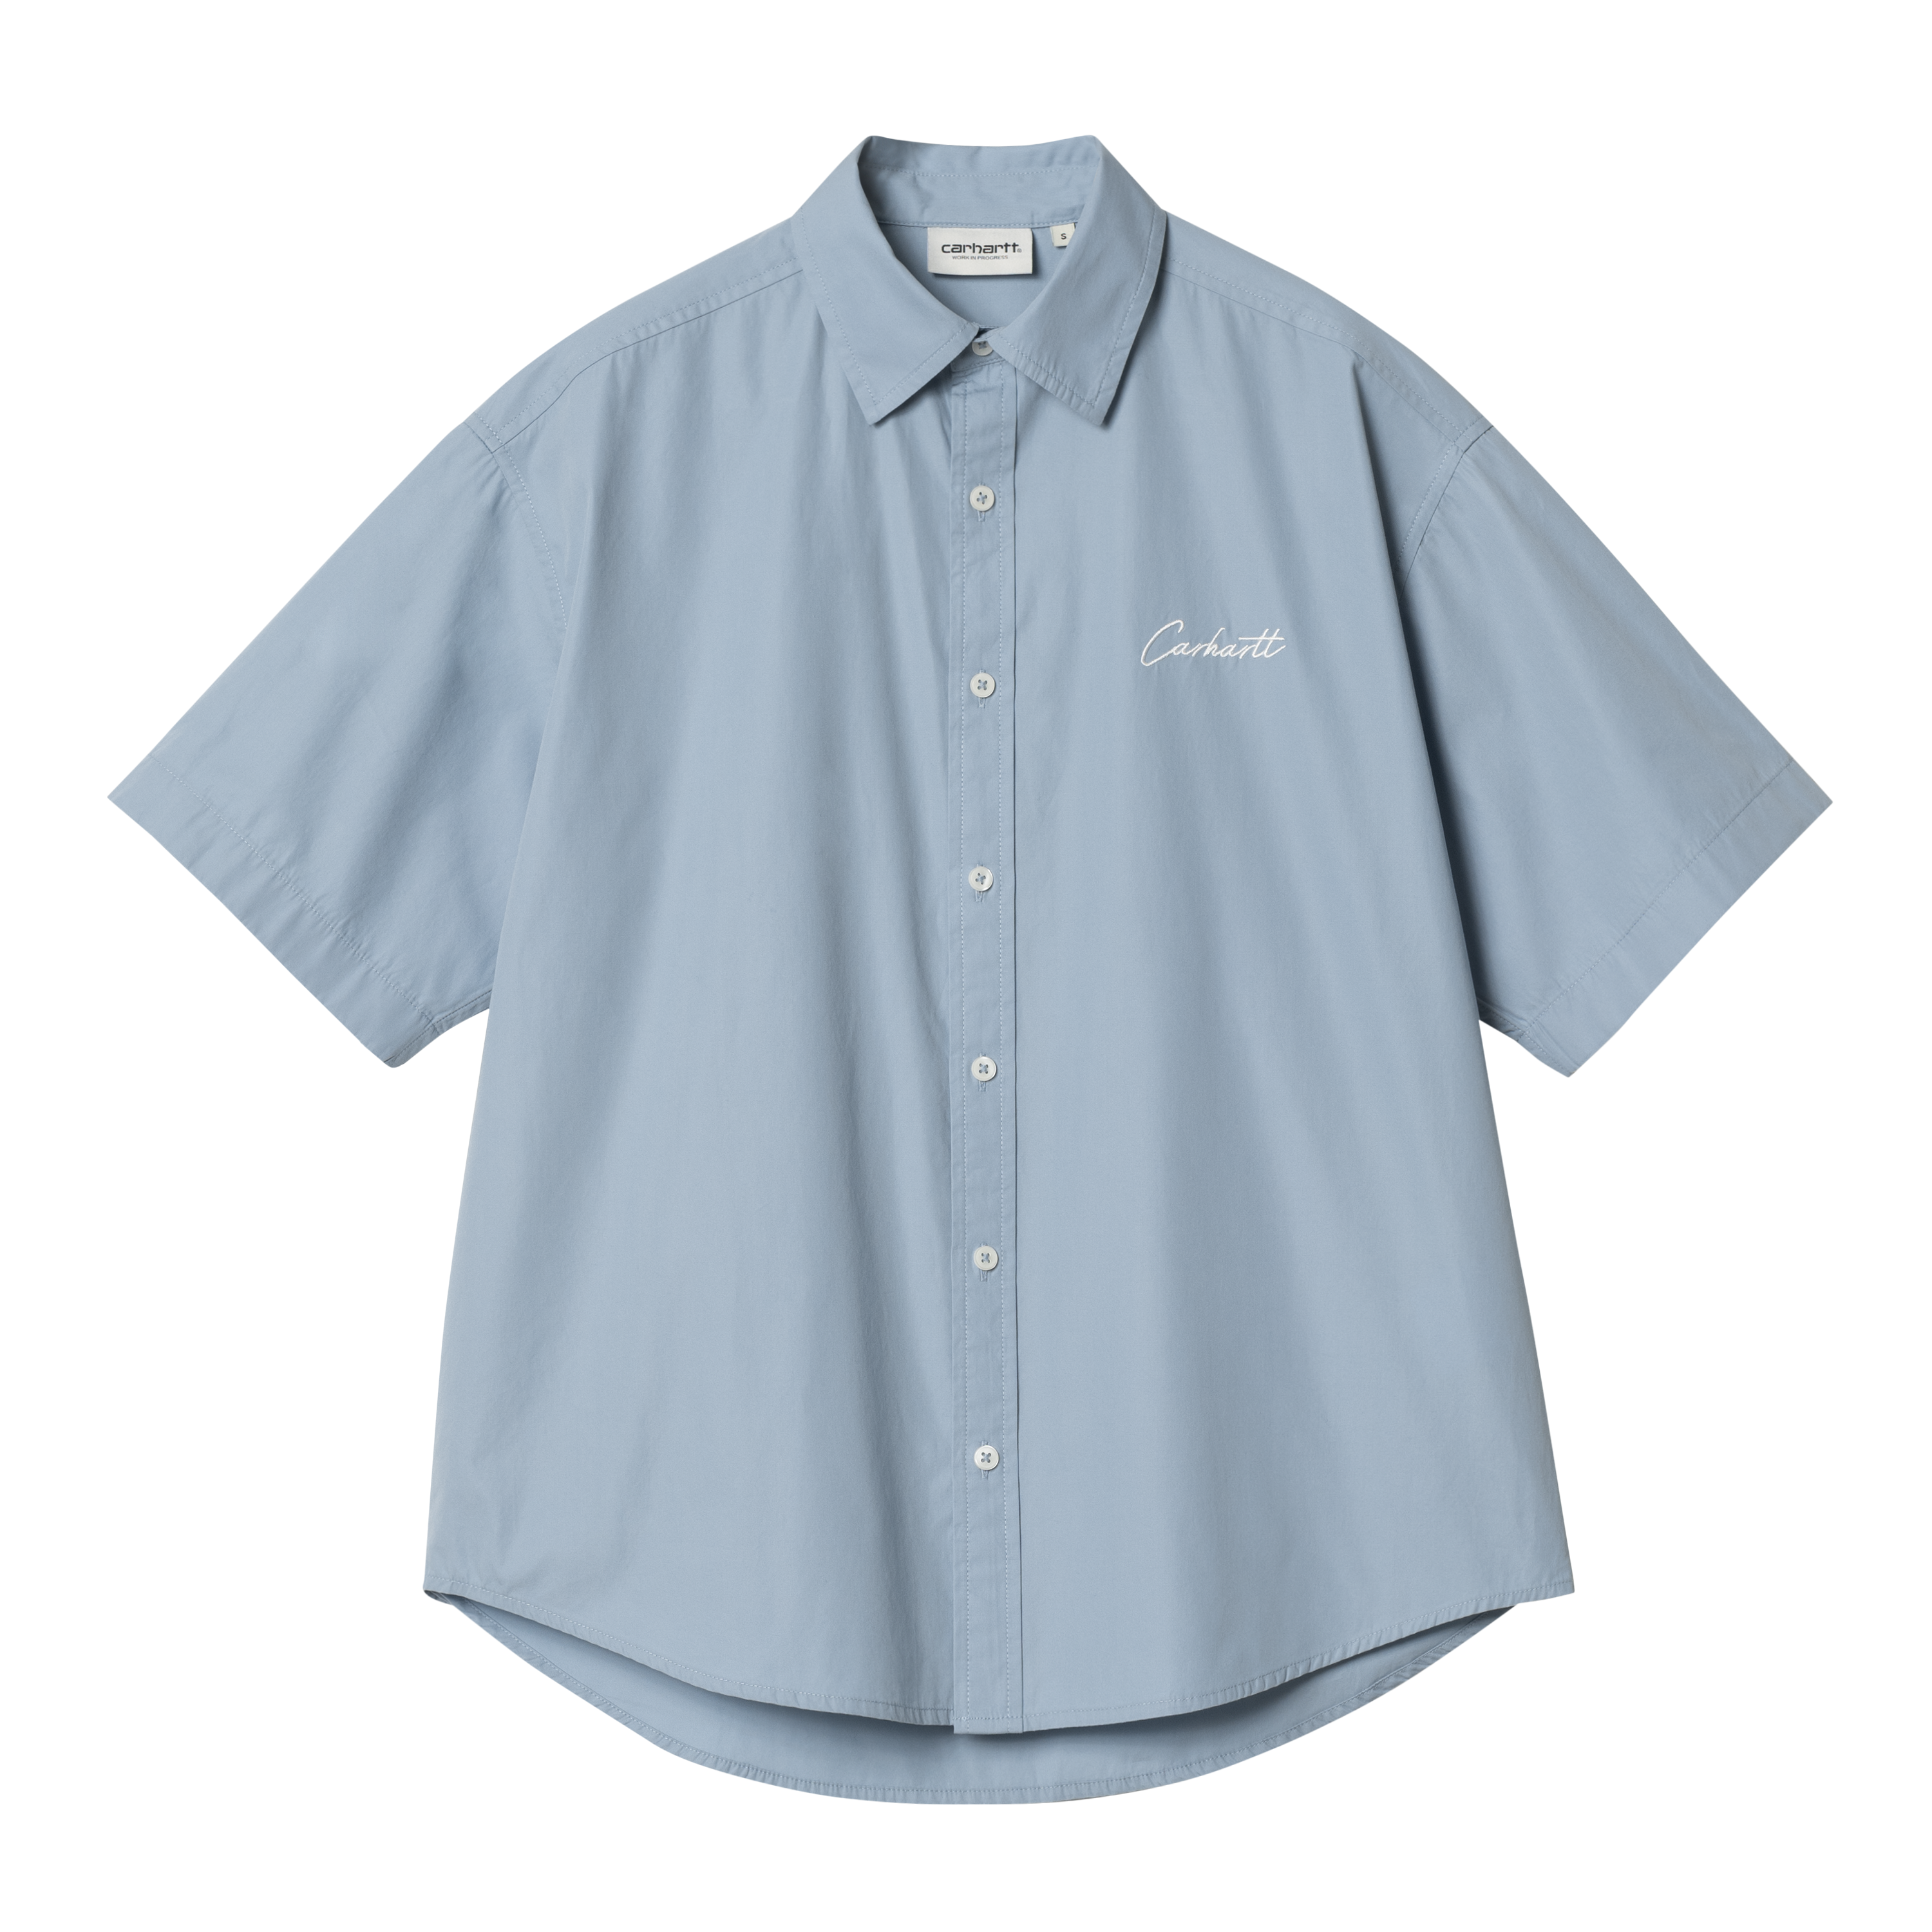 Carhartt WIP Women’s Short Sleeve Jaxon Shirt in Blau